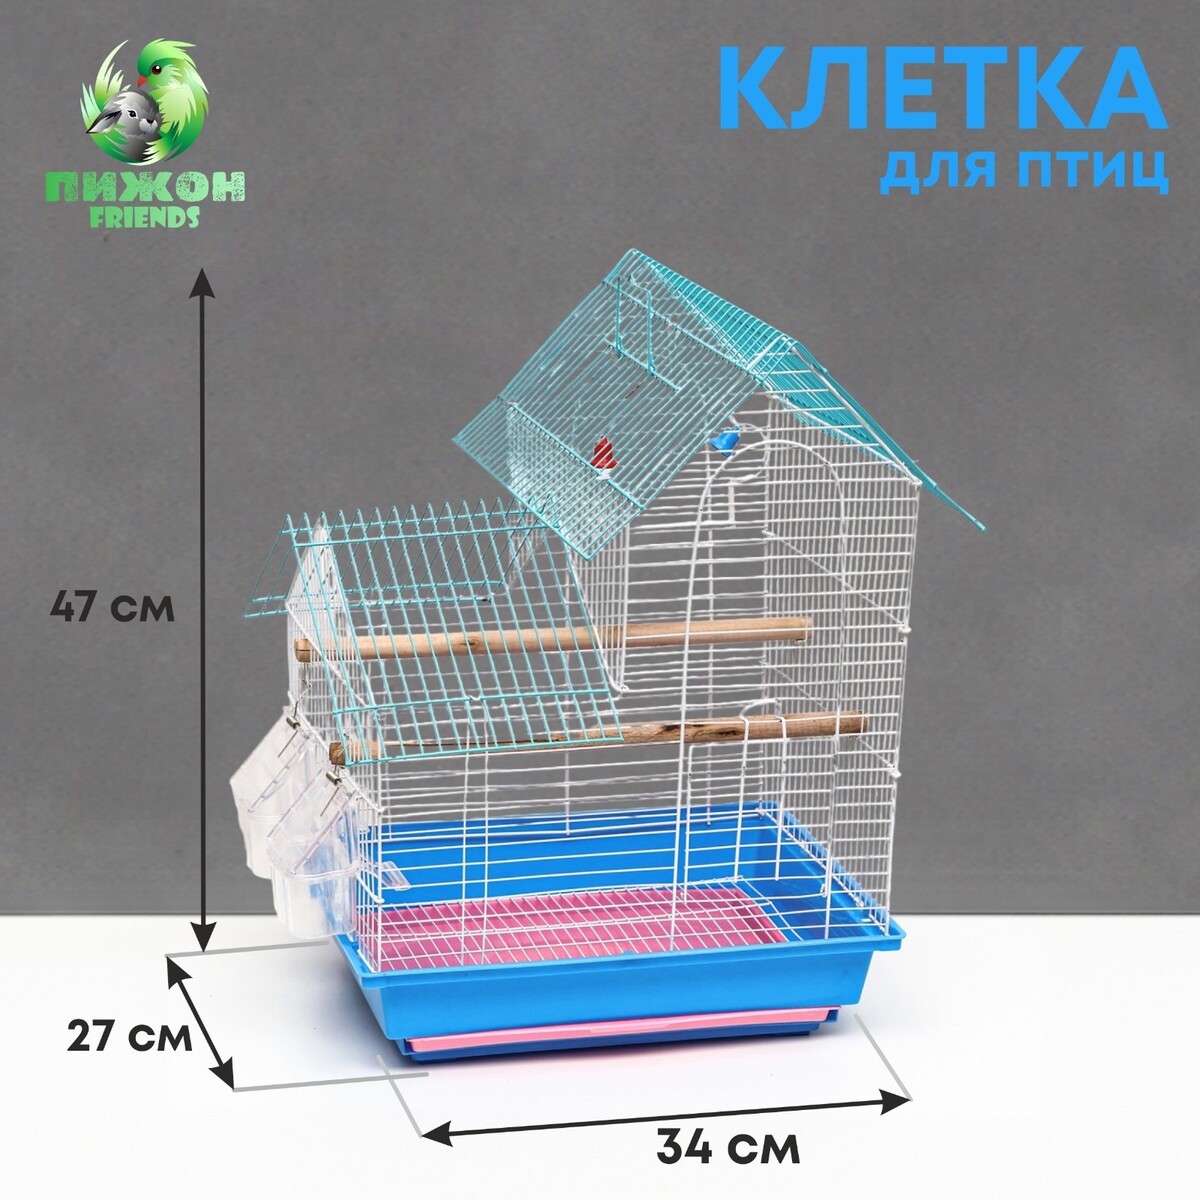 Клетка для птиц укомплектованная bd-2/5h, 34 х 27 х 47 см, синяя kopмушка для птиц 22 × 17 × 17 см разобранная